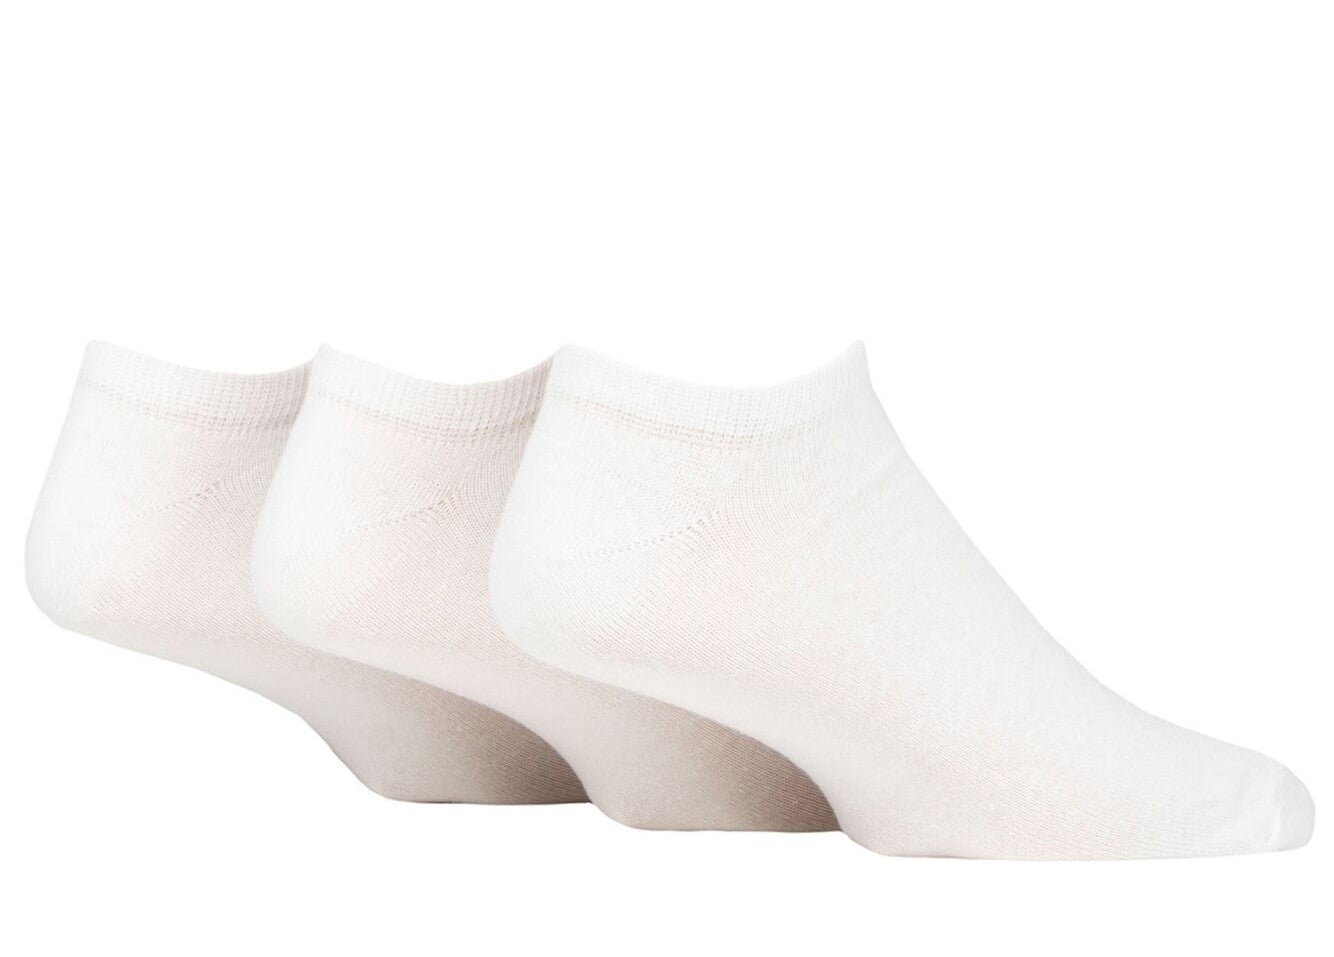 TORE 3Pk 100% Recycled Cotton Plain Trainer Socks- Mens 7-11